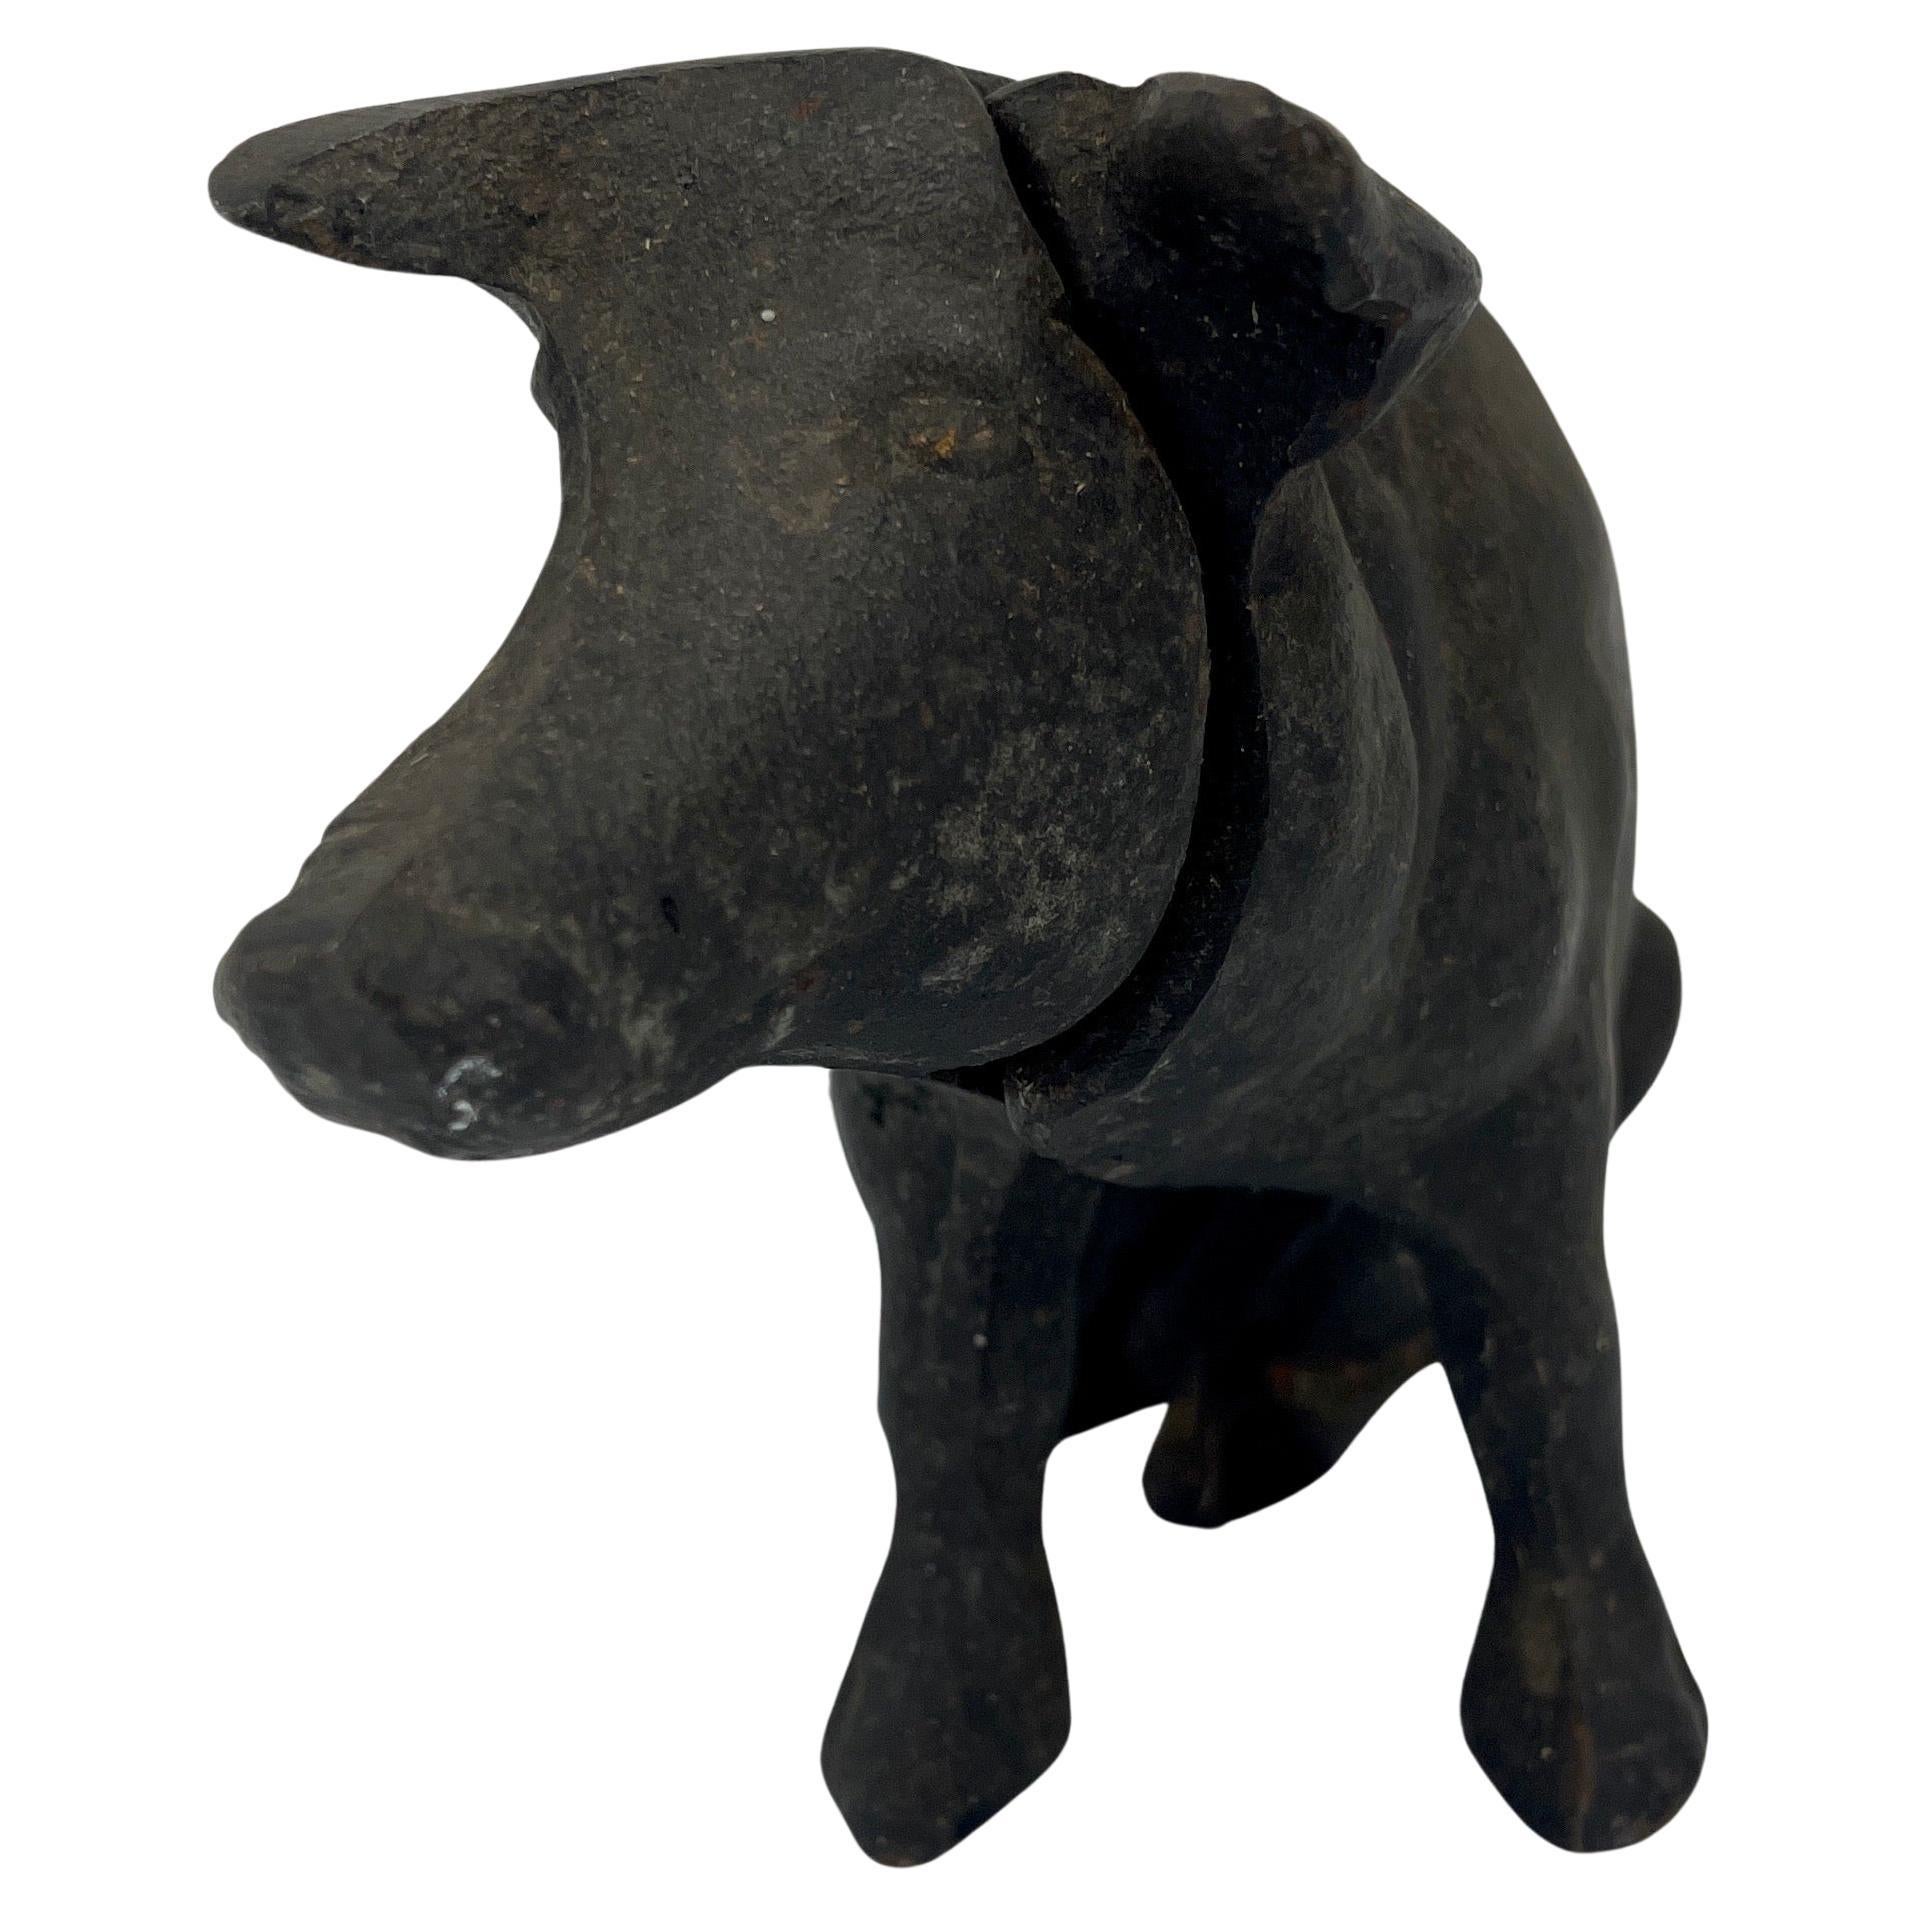 Hand-Crafted Cast Iron Pig Desk Accessory or Decorative Folk Art Statue